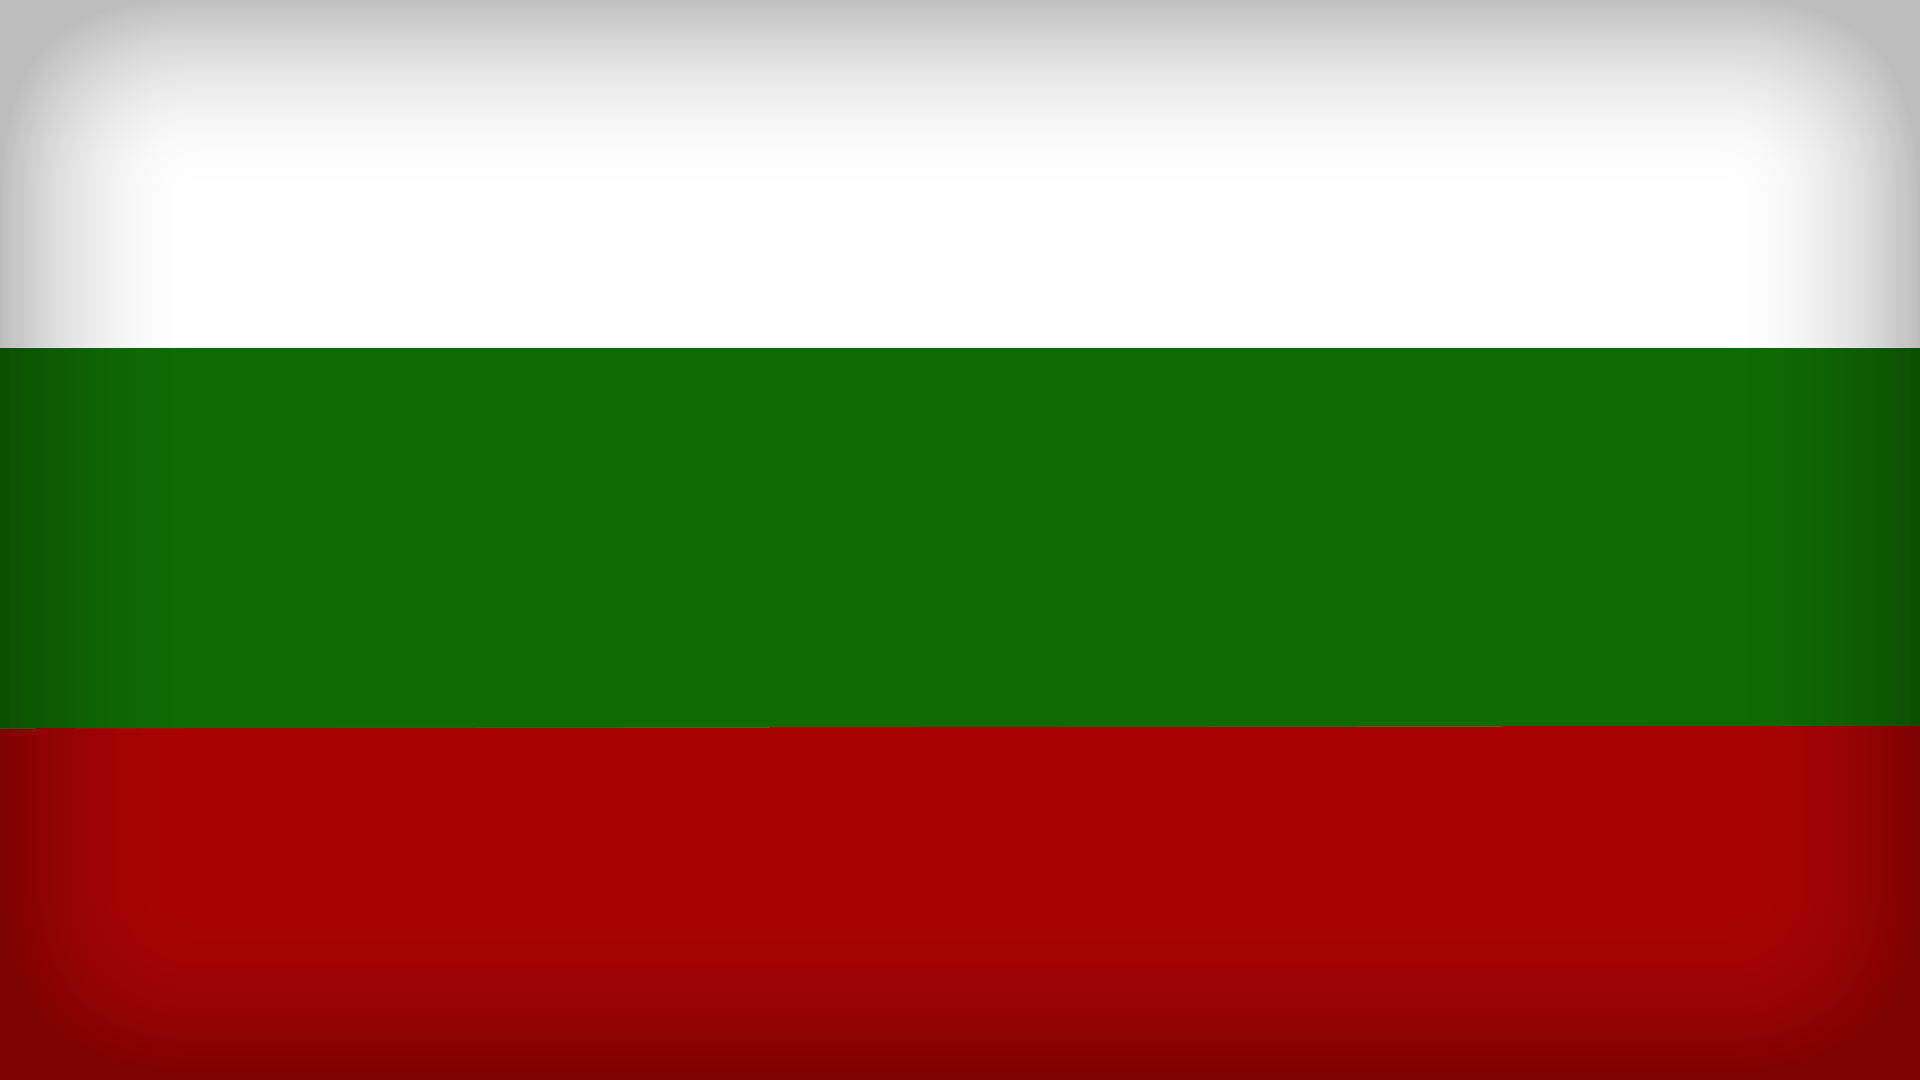 Bulgaria Flag, High Definition, High Quality, Widescreen